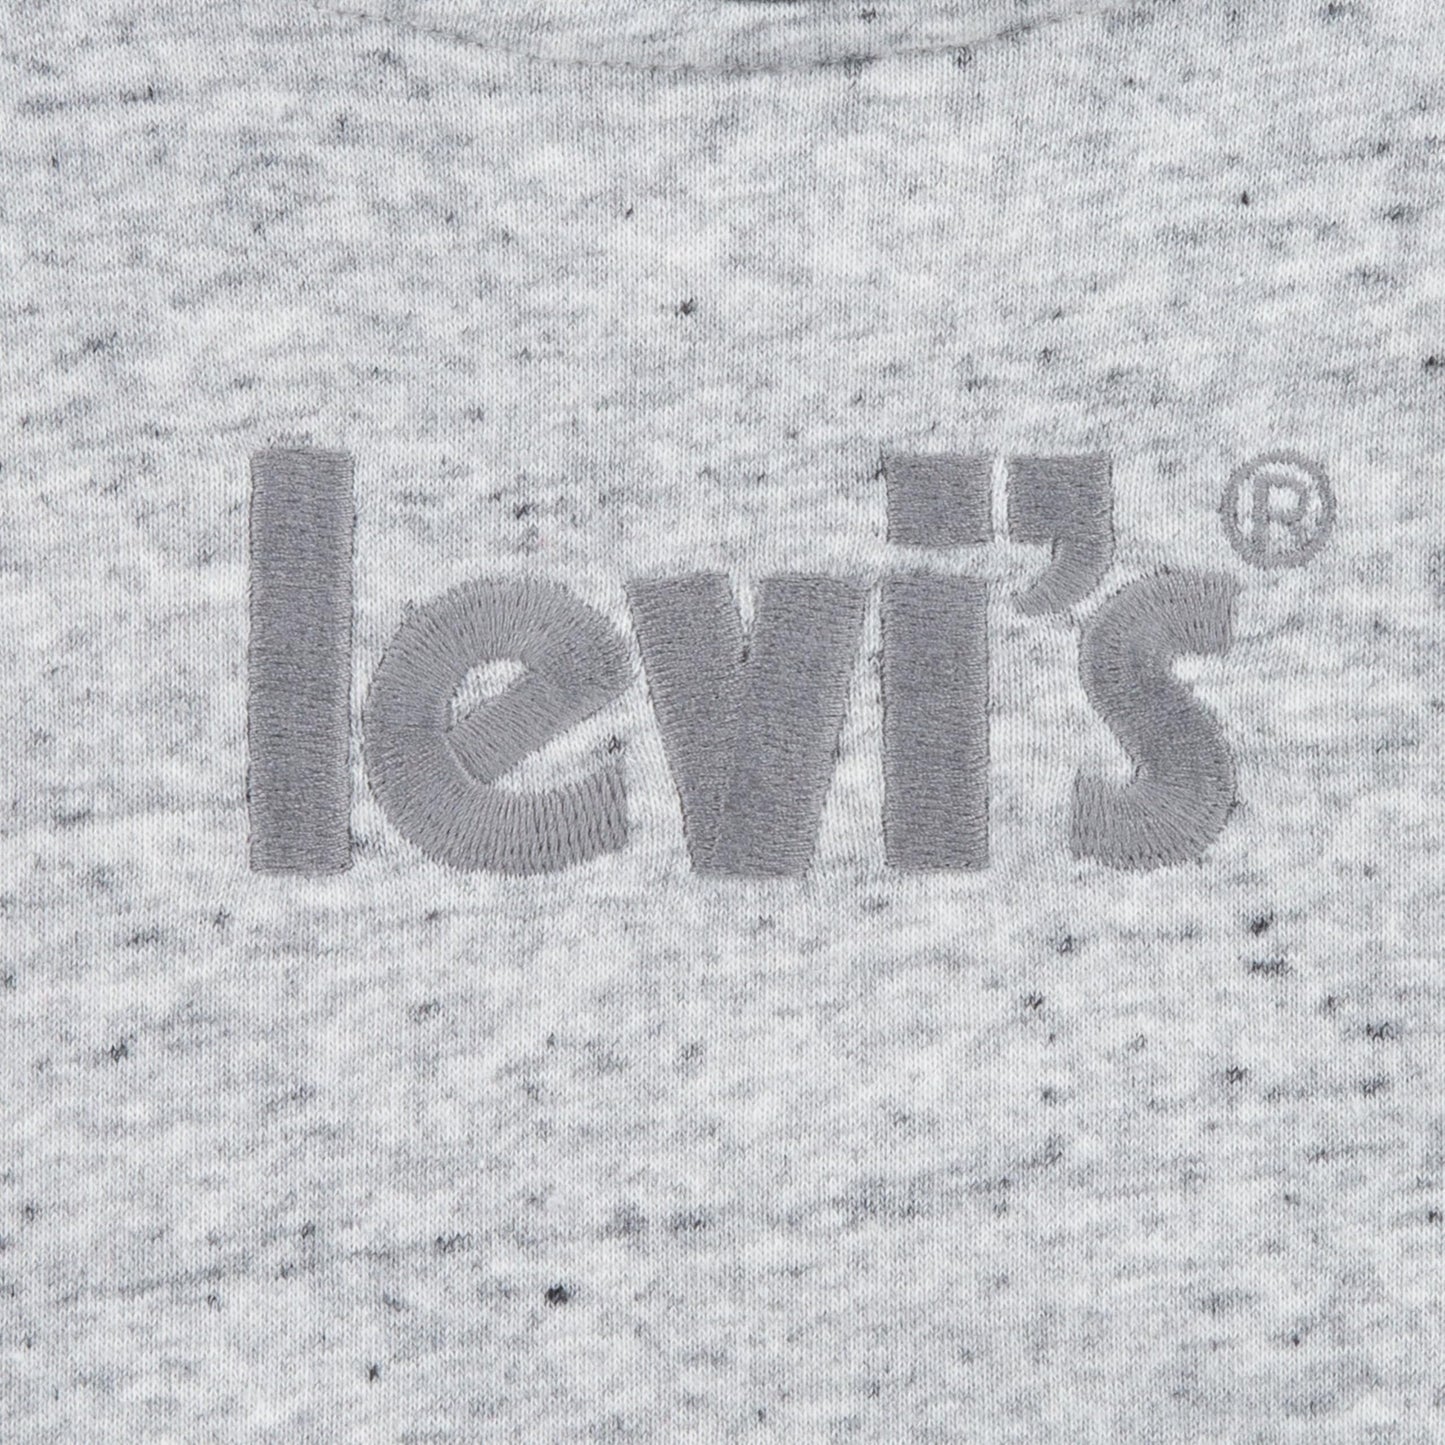 Levi's LVB Logo Pullover Hoodie Grey